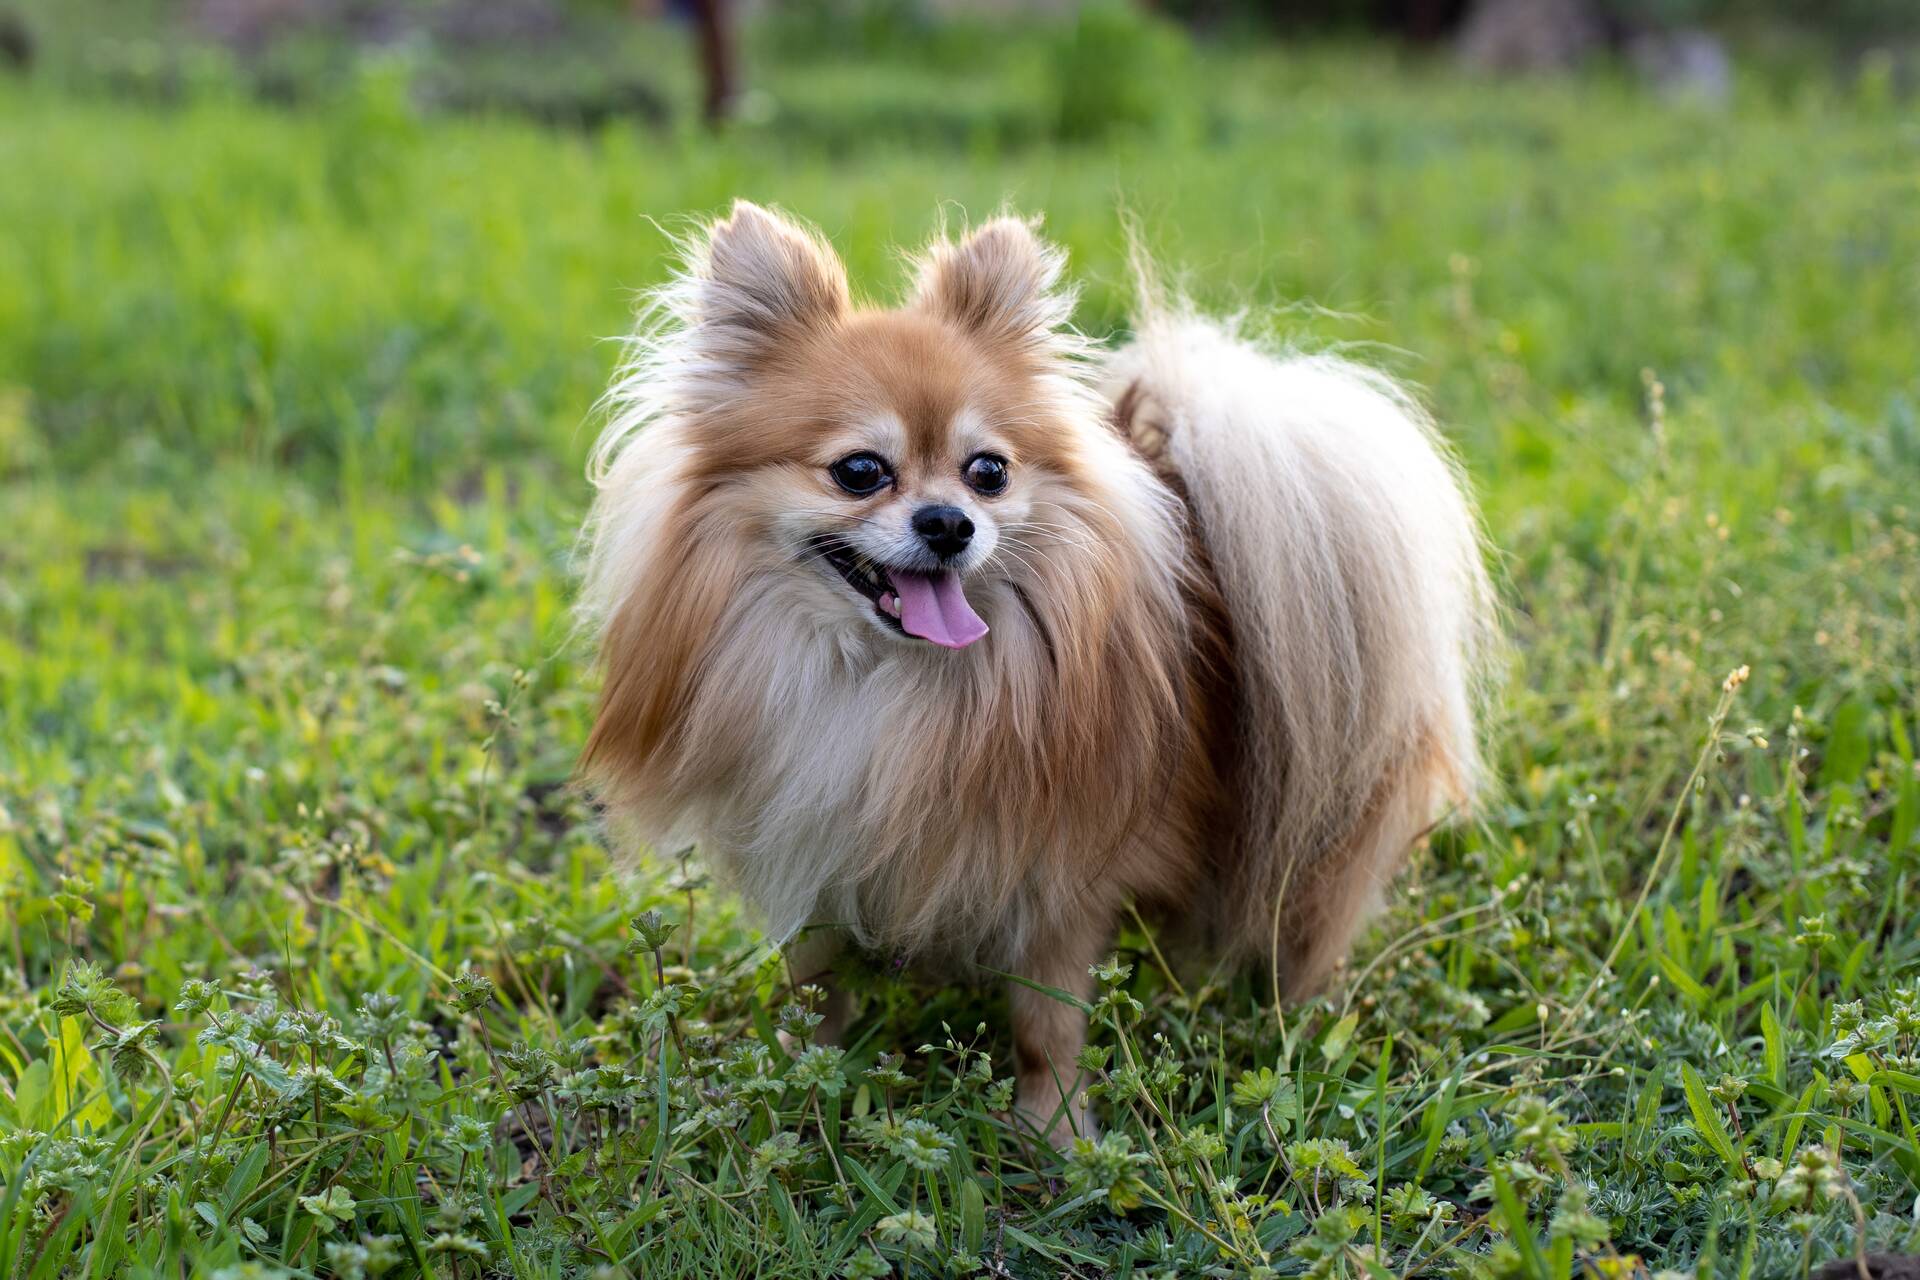 A Pomeranian standing in grass